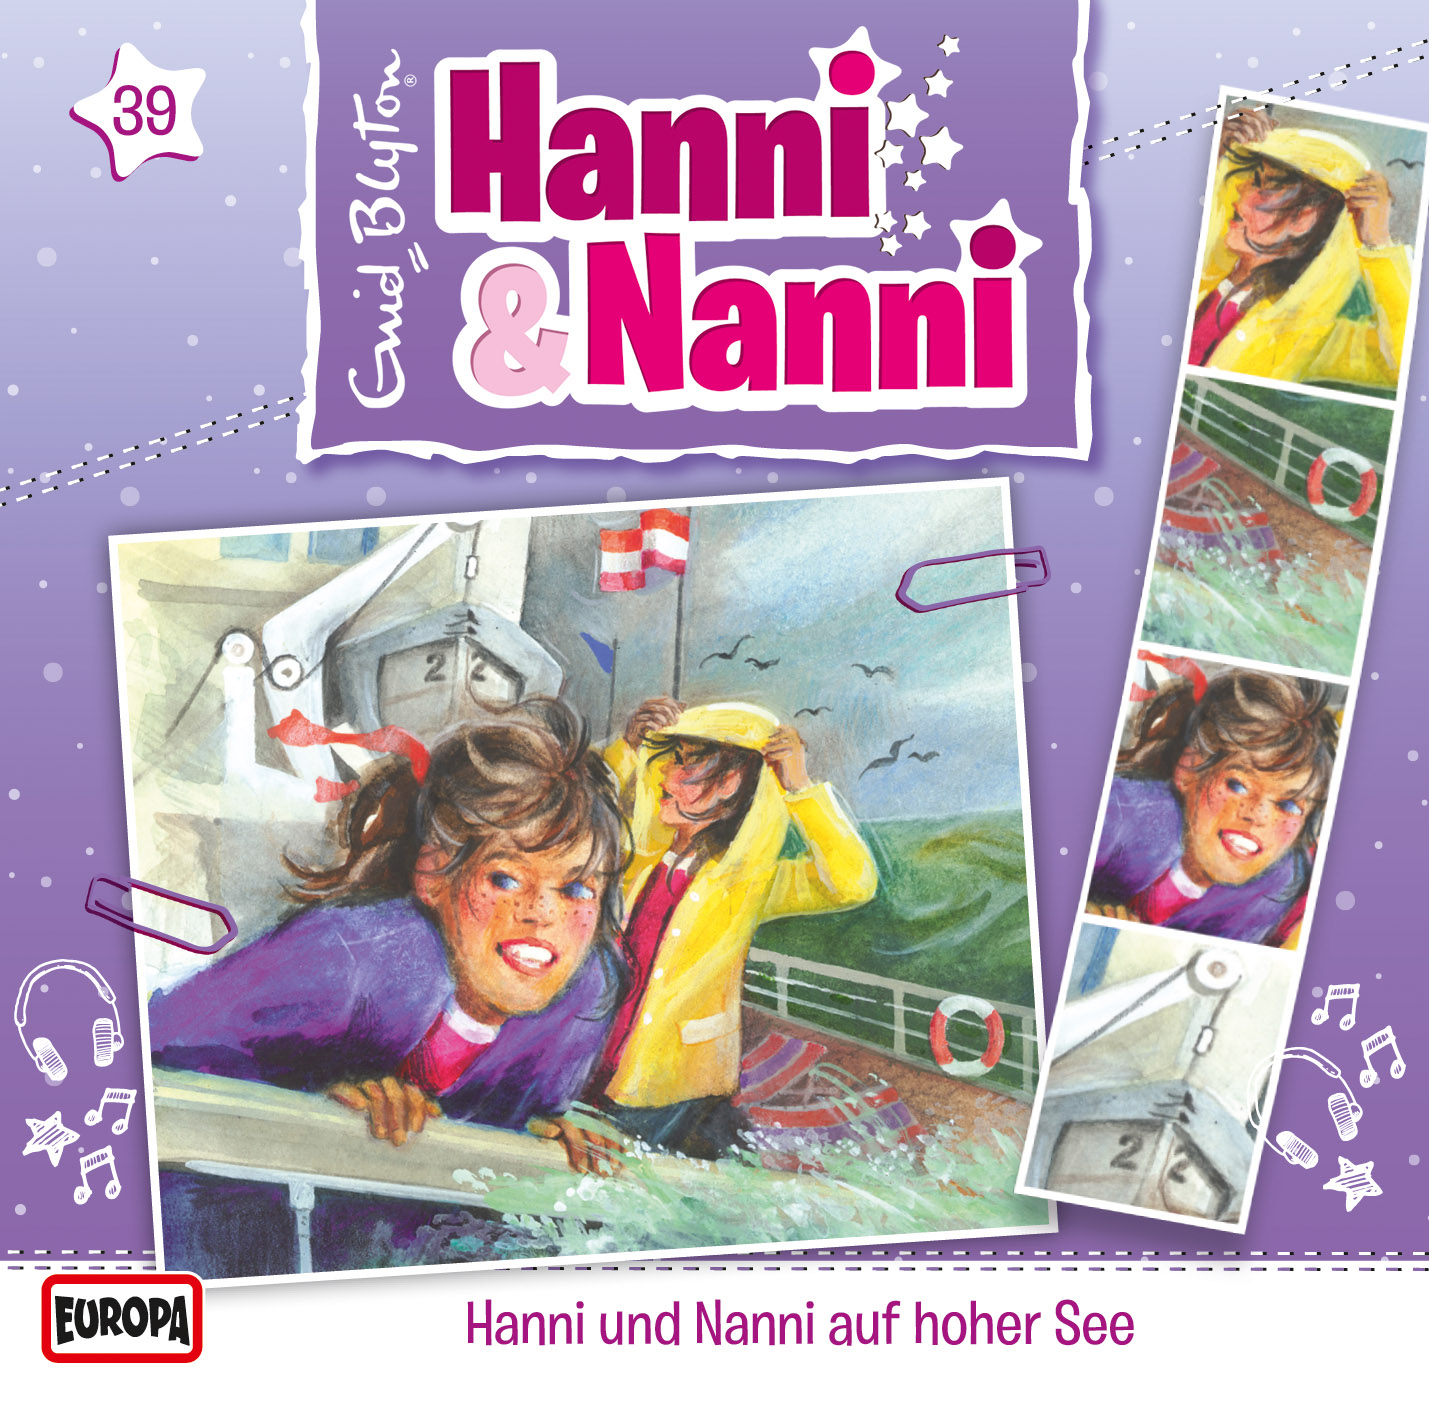 Hanni und Nanni: Hanni & Nanni auf hoher See